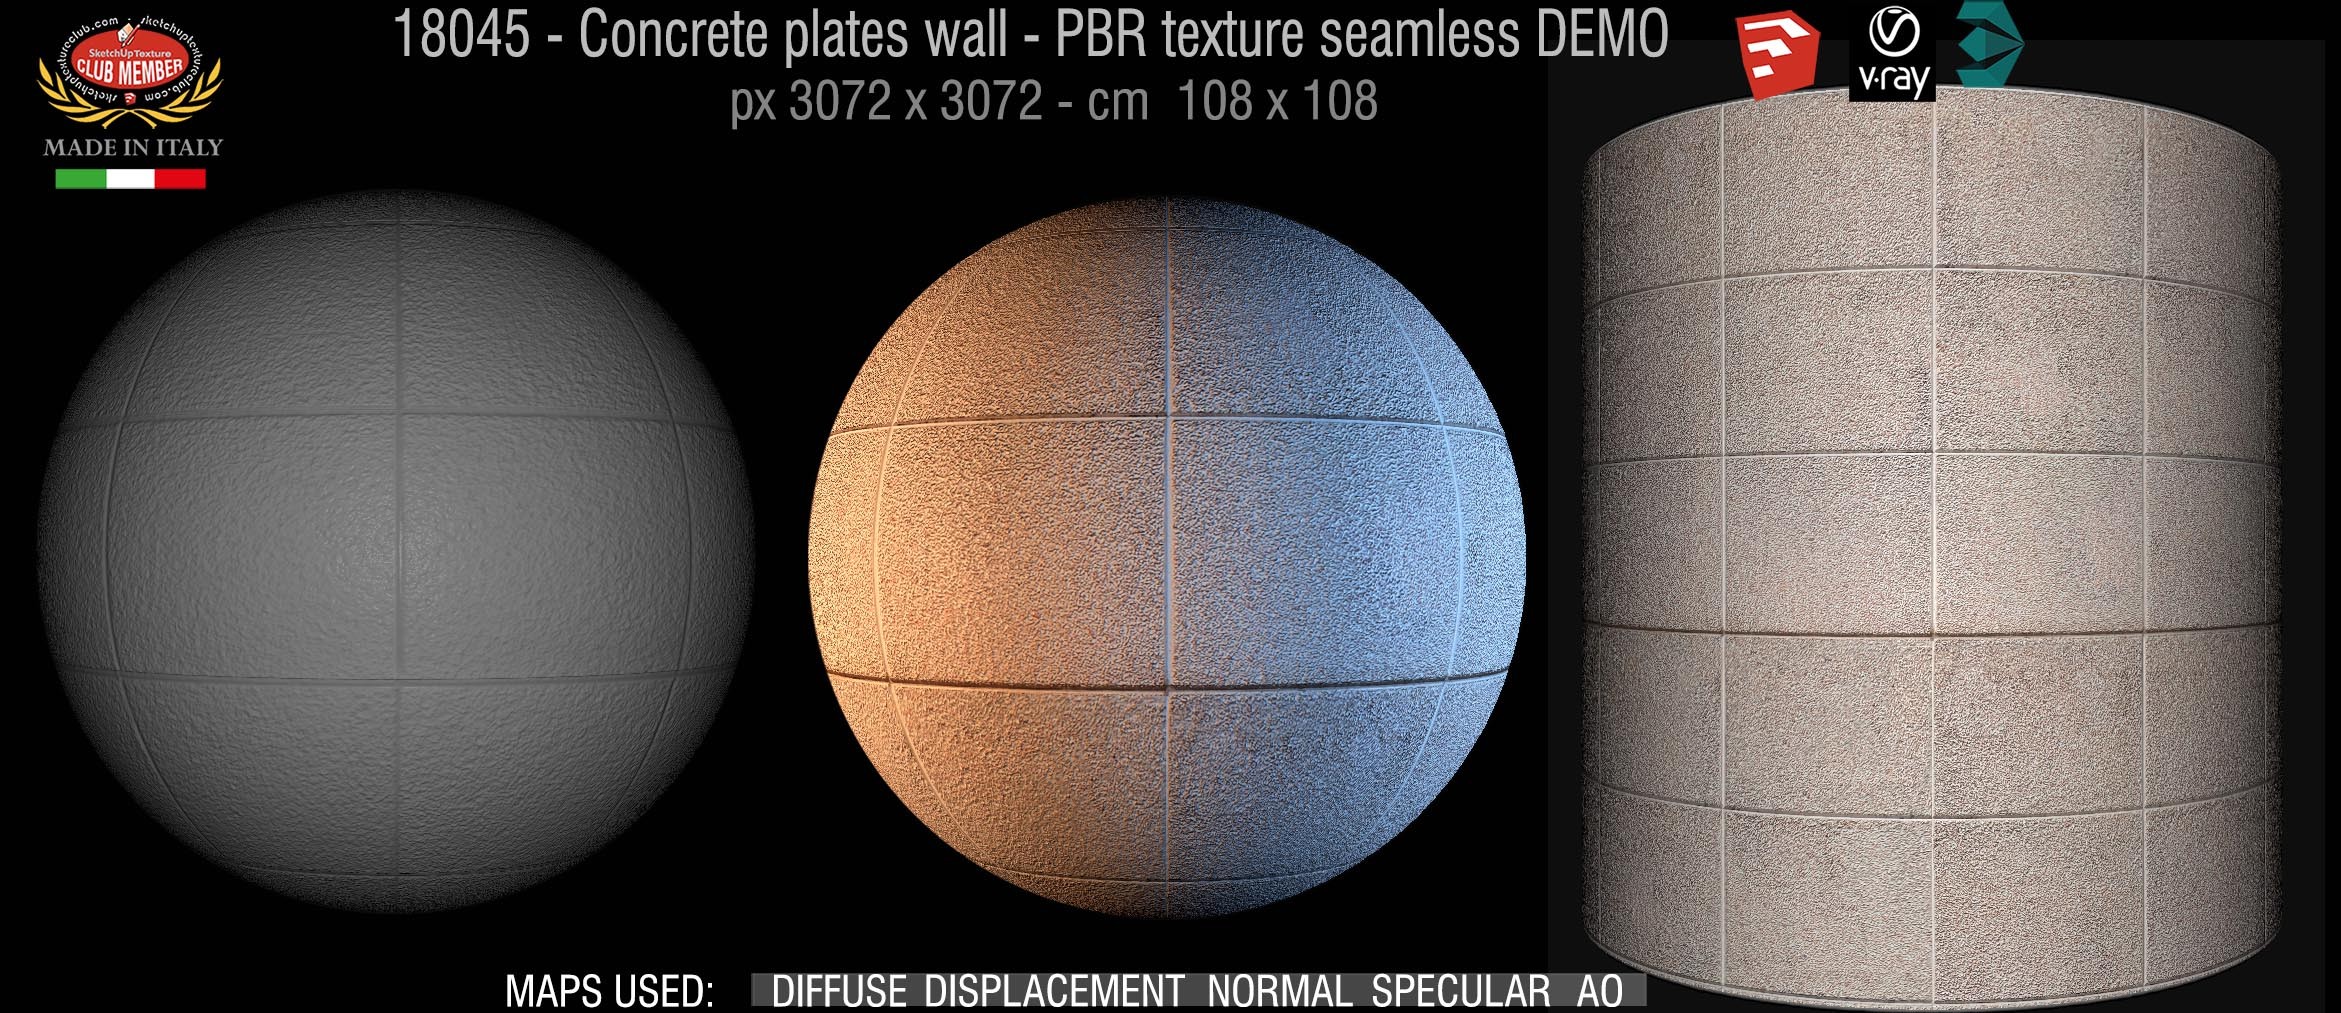 18045 concrete plates wall PBR texture seamless demo